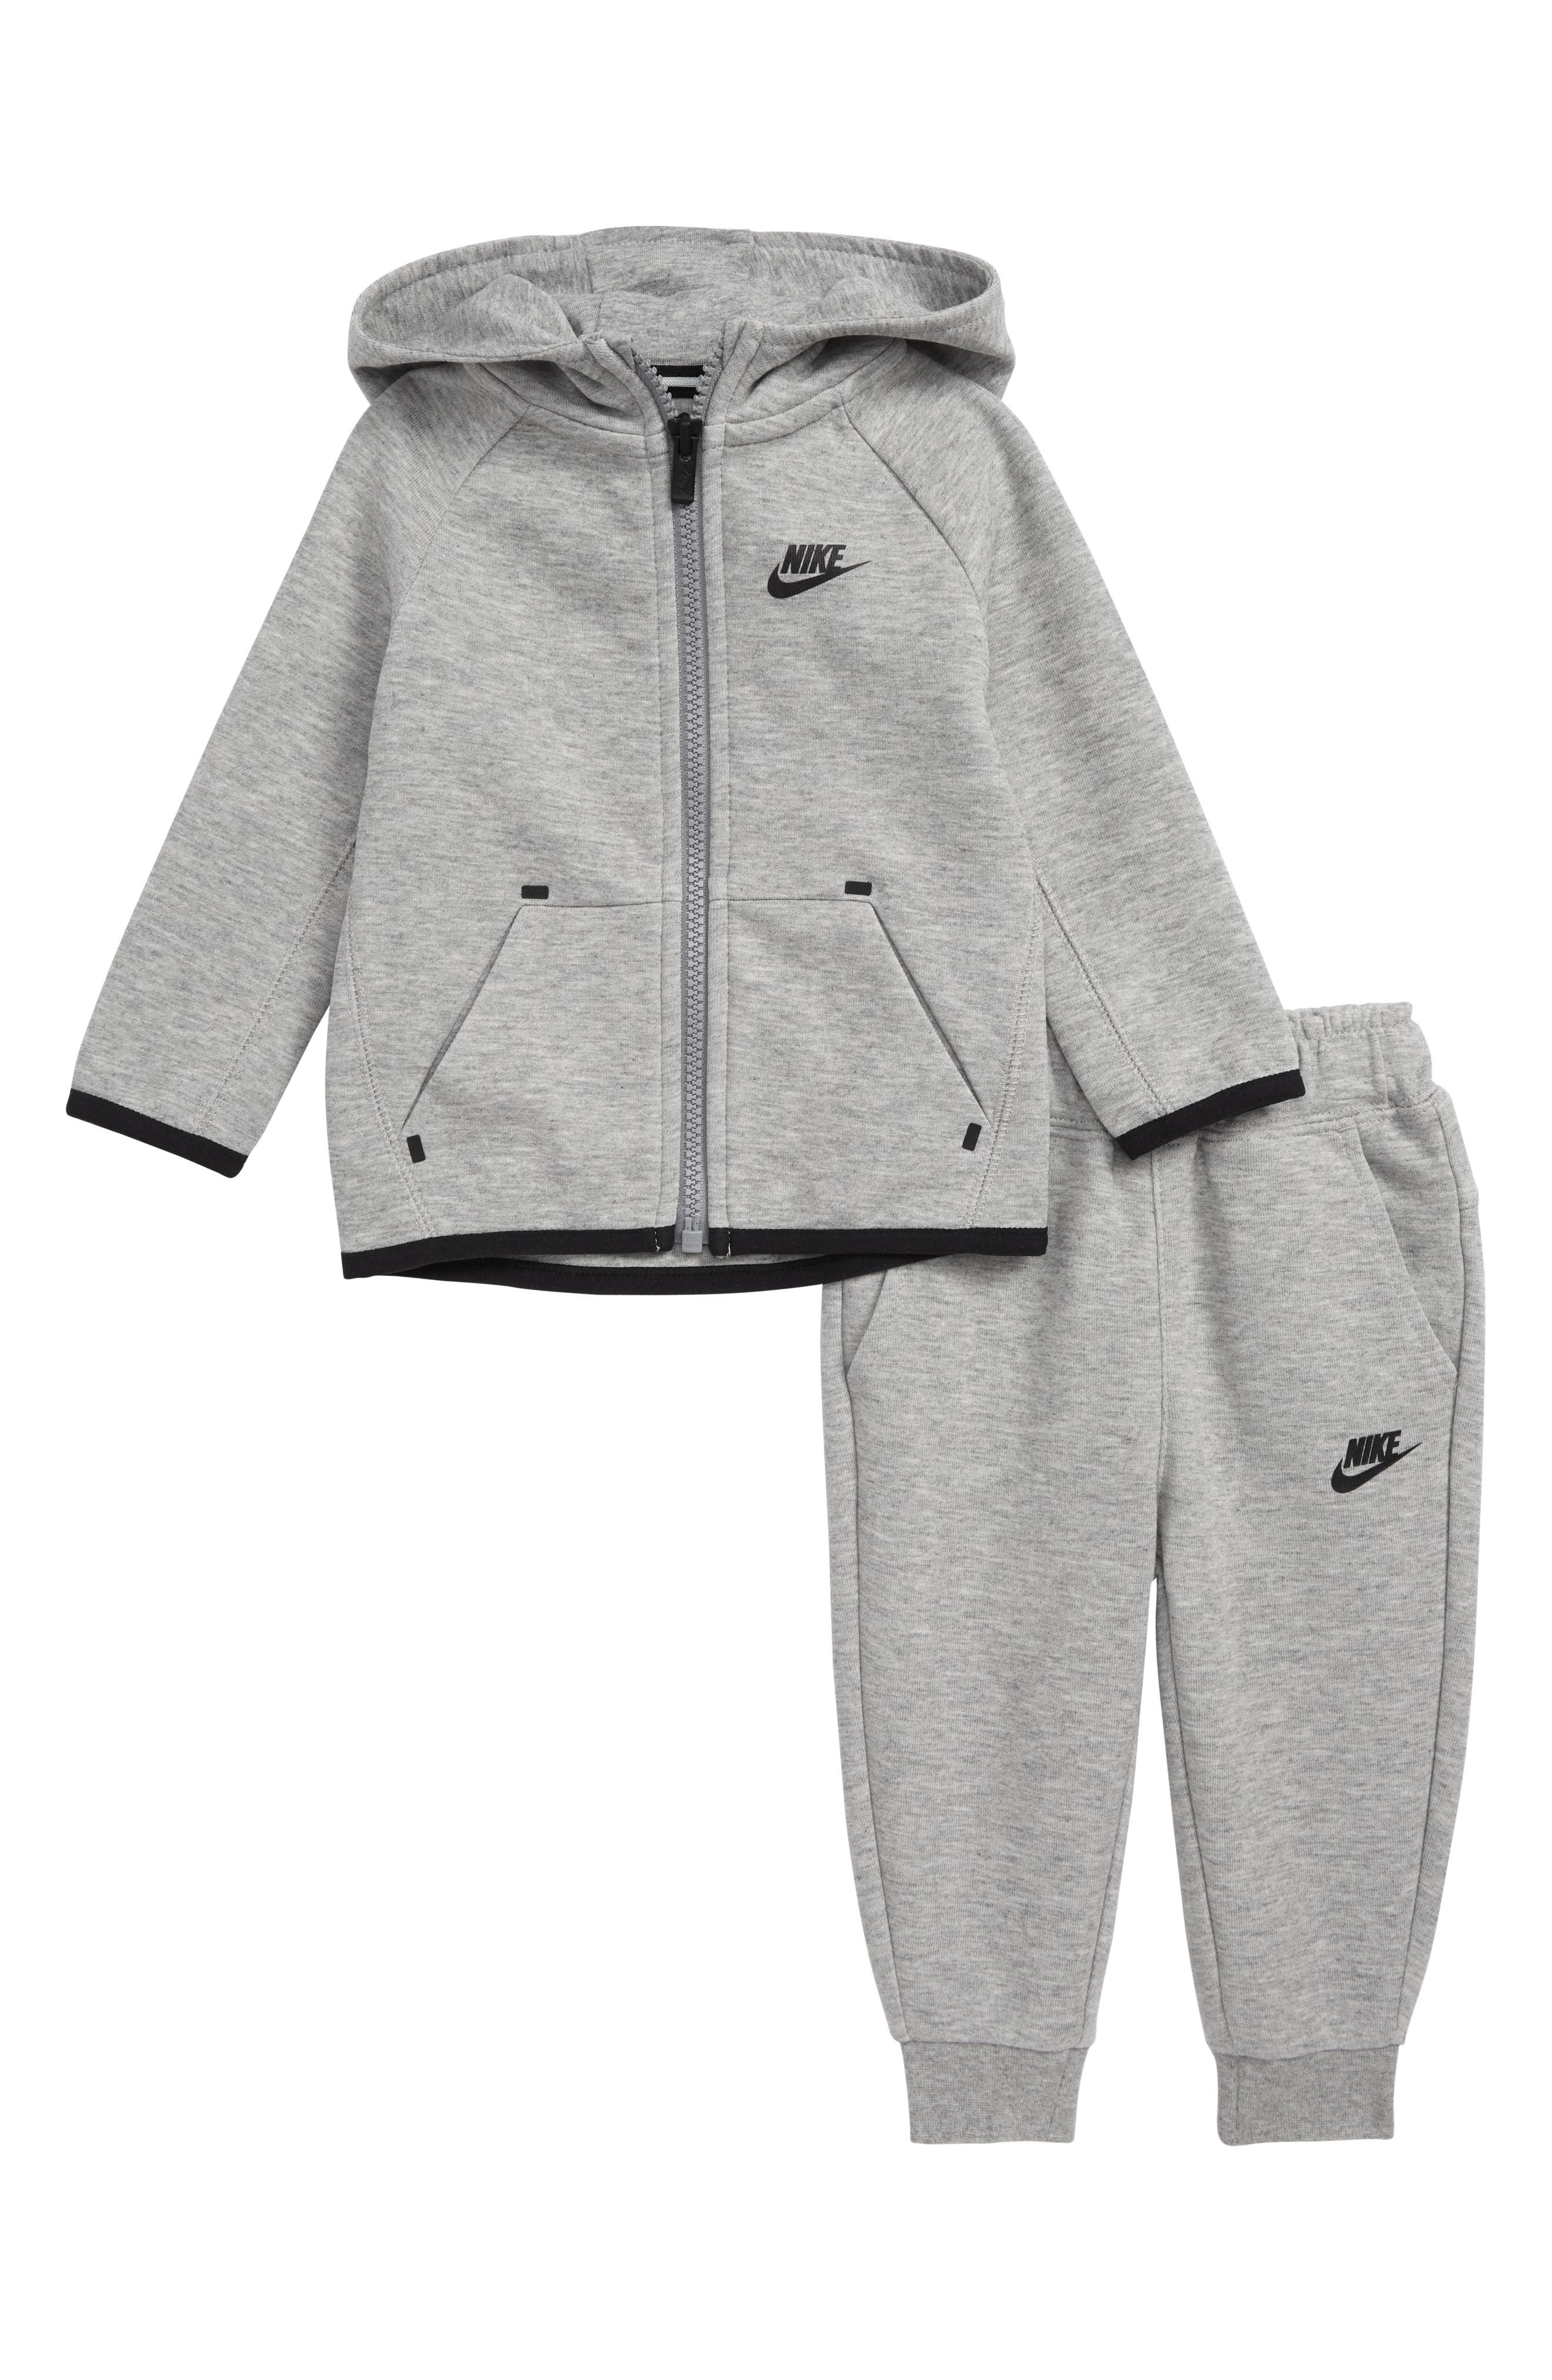 grey nike sweatpants and hoodie